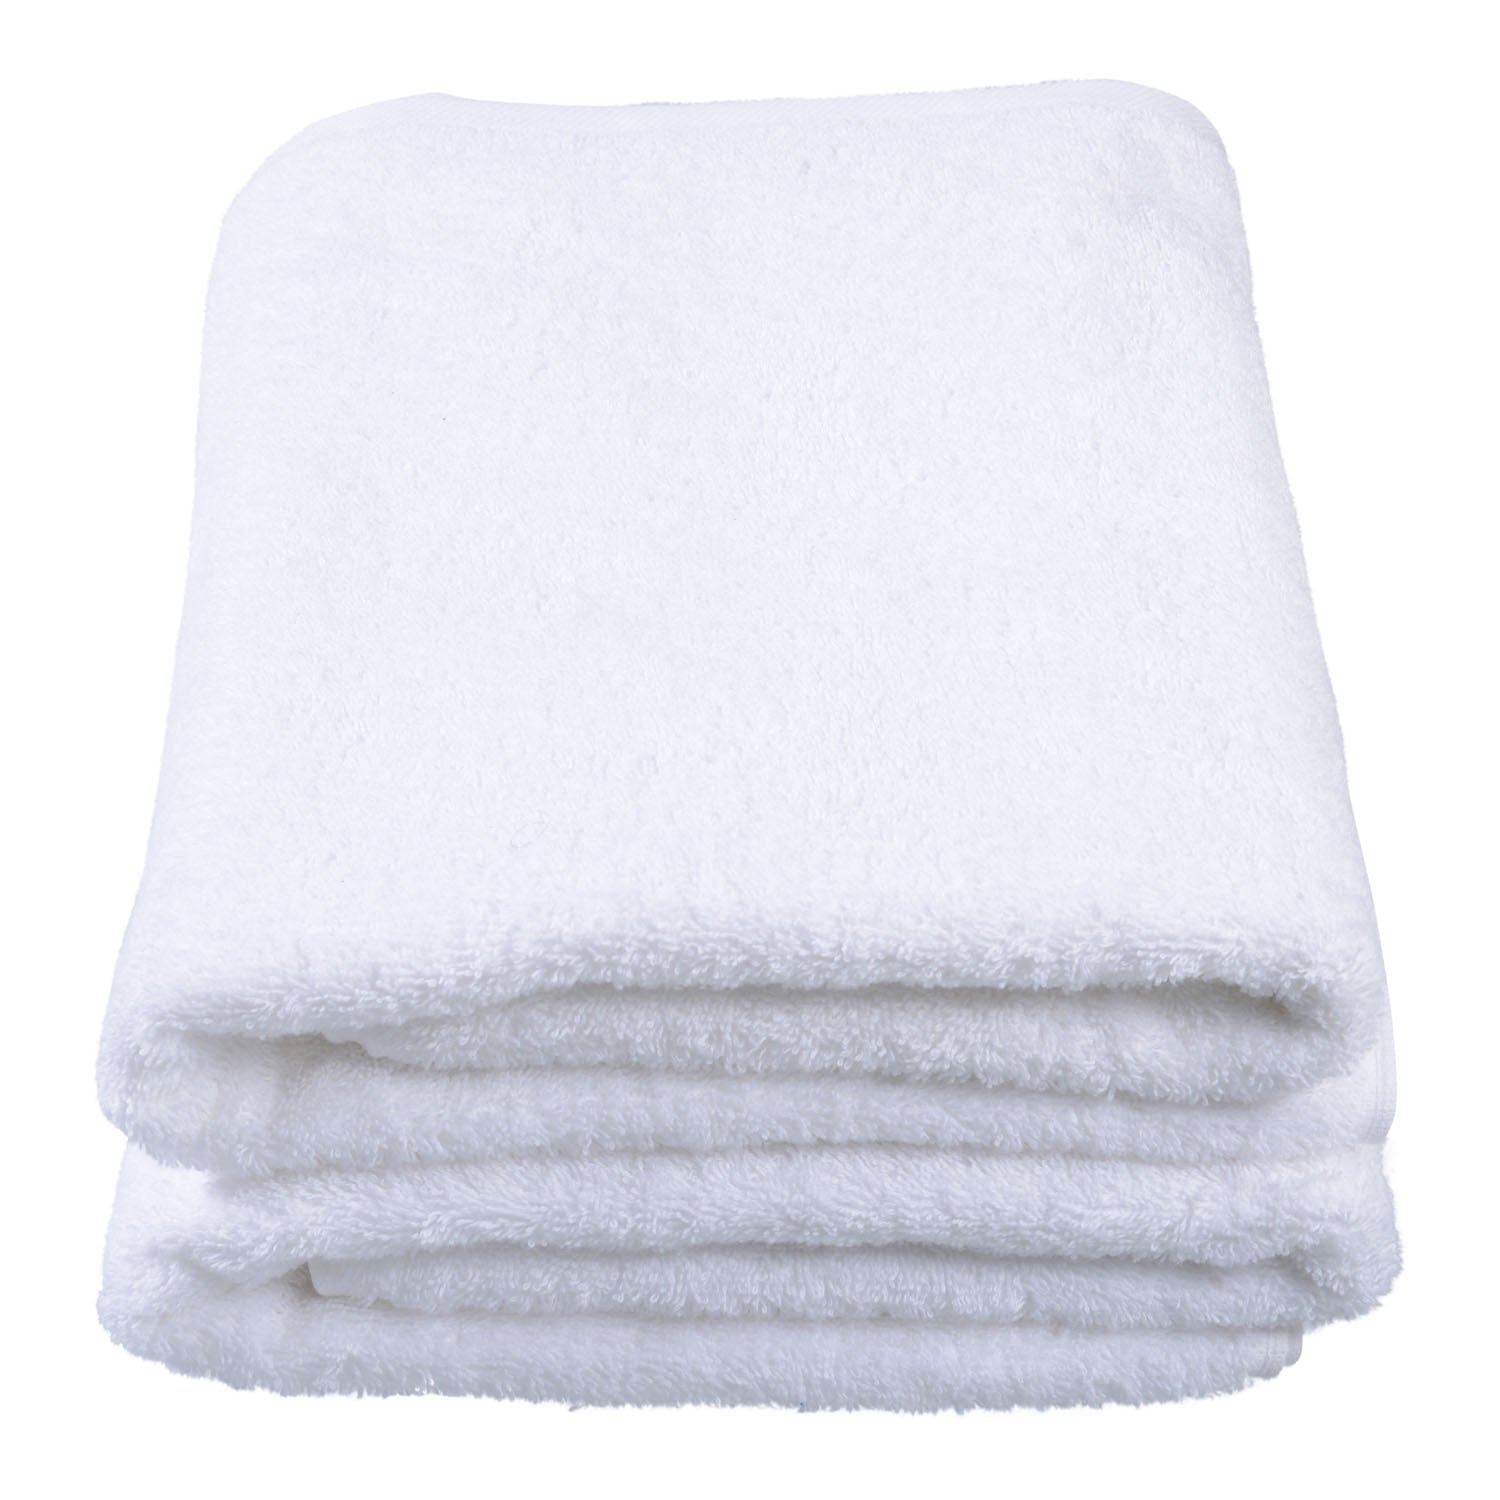 Indulgence Bath Towels